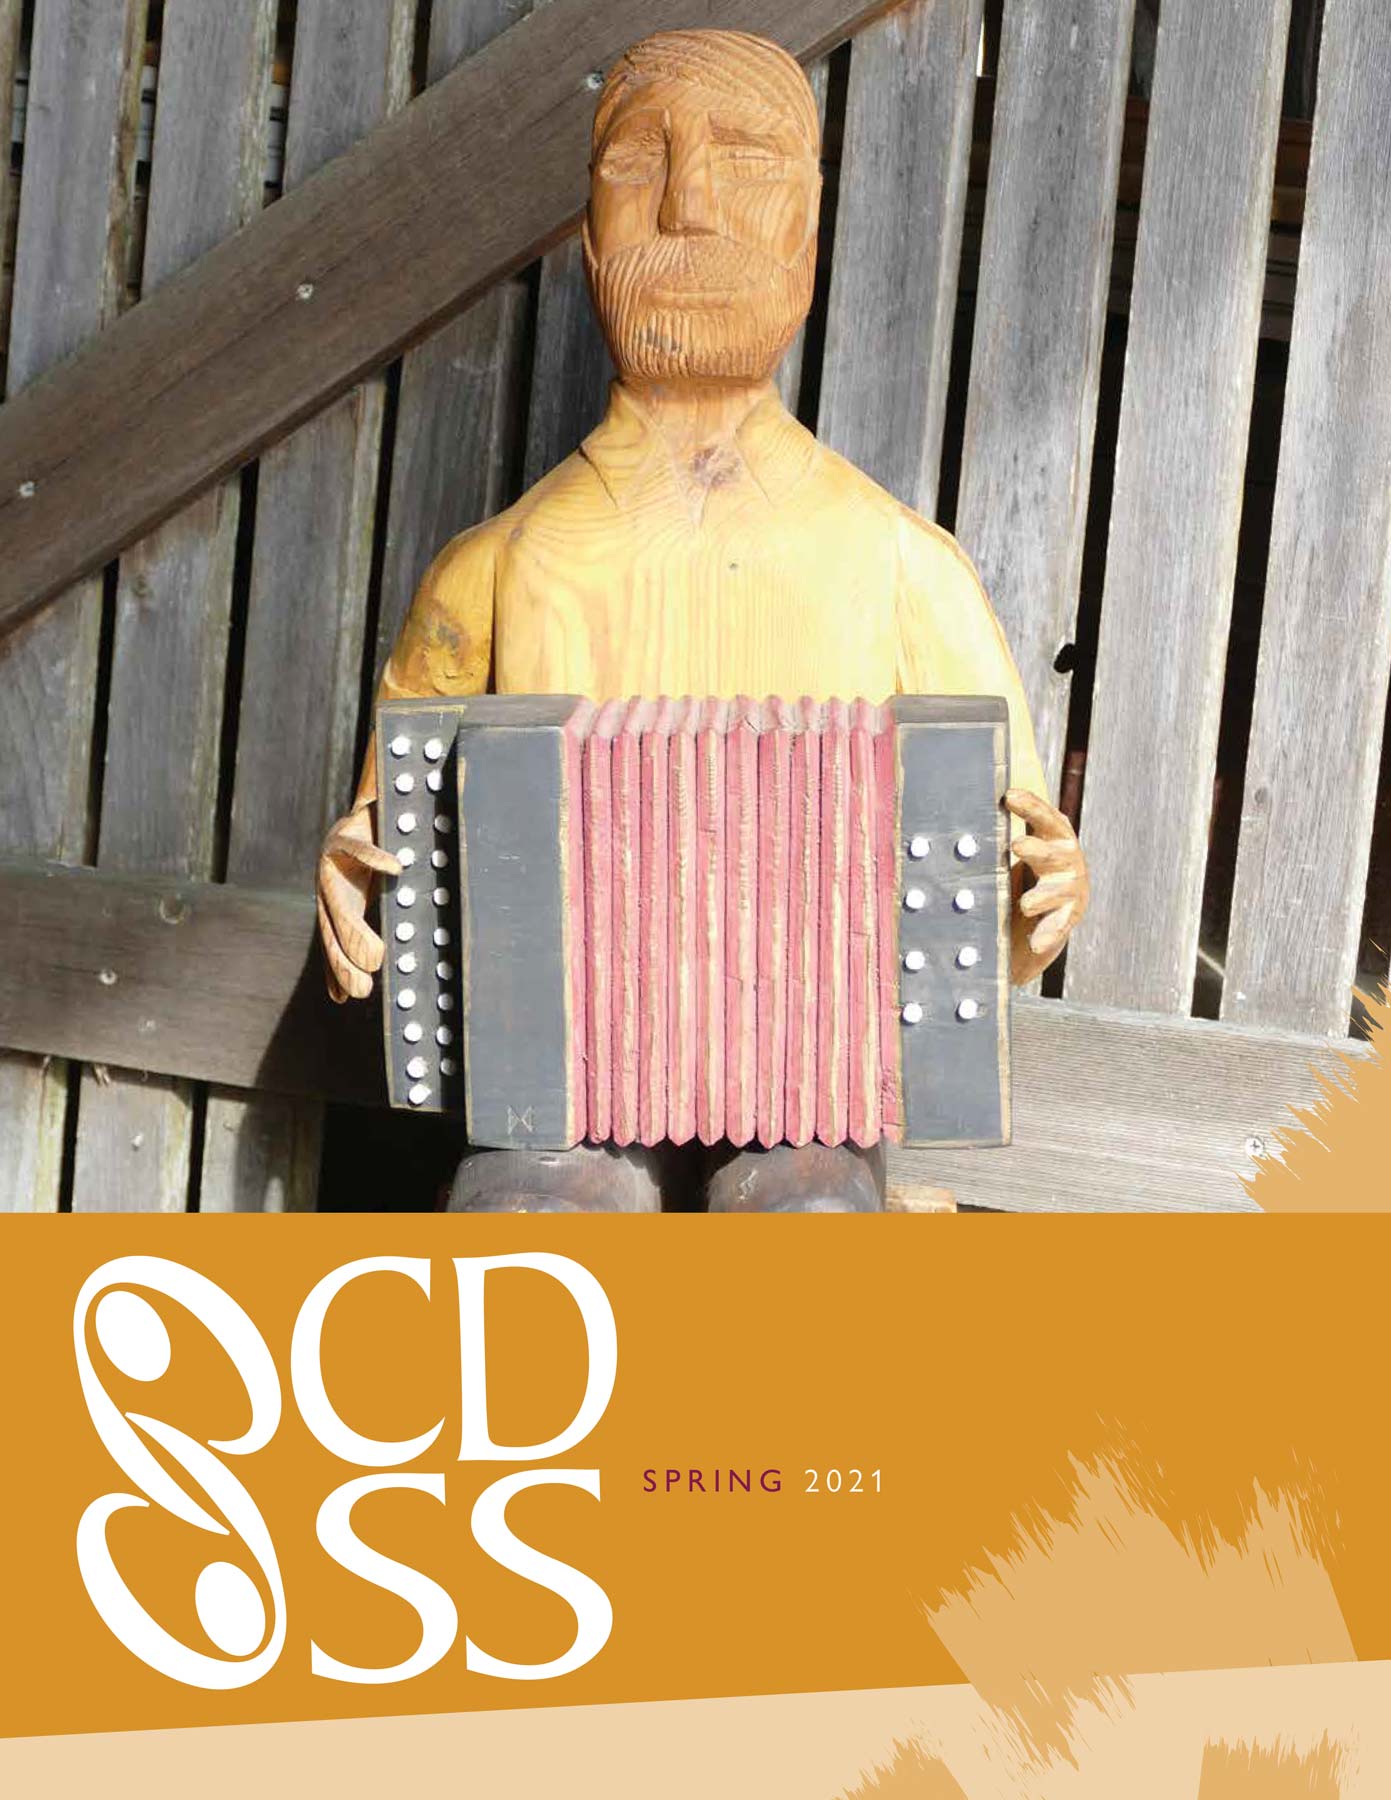 CDSS News, Spring 2021